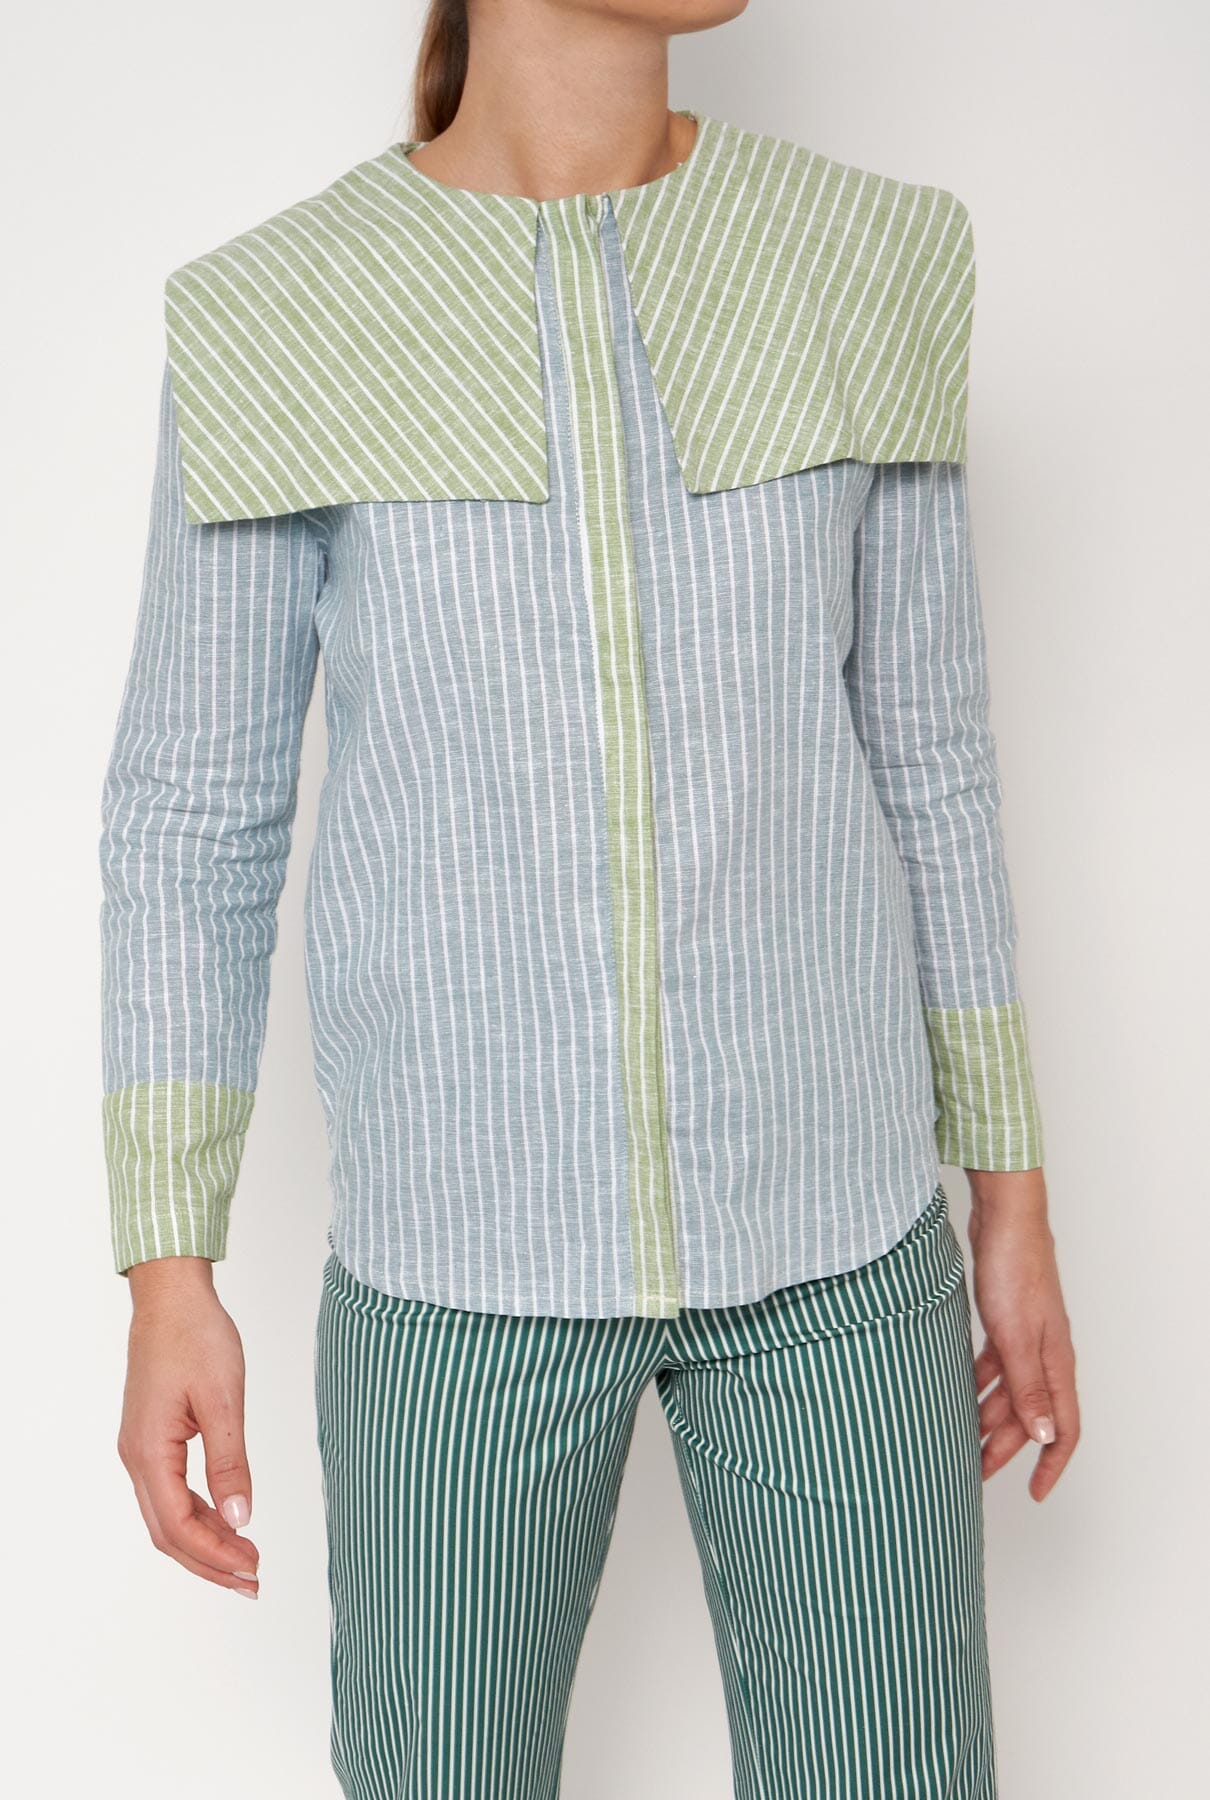 Camisa Loulou azul/verde Shirts & blouses Vano Studio 